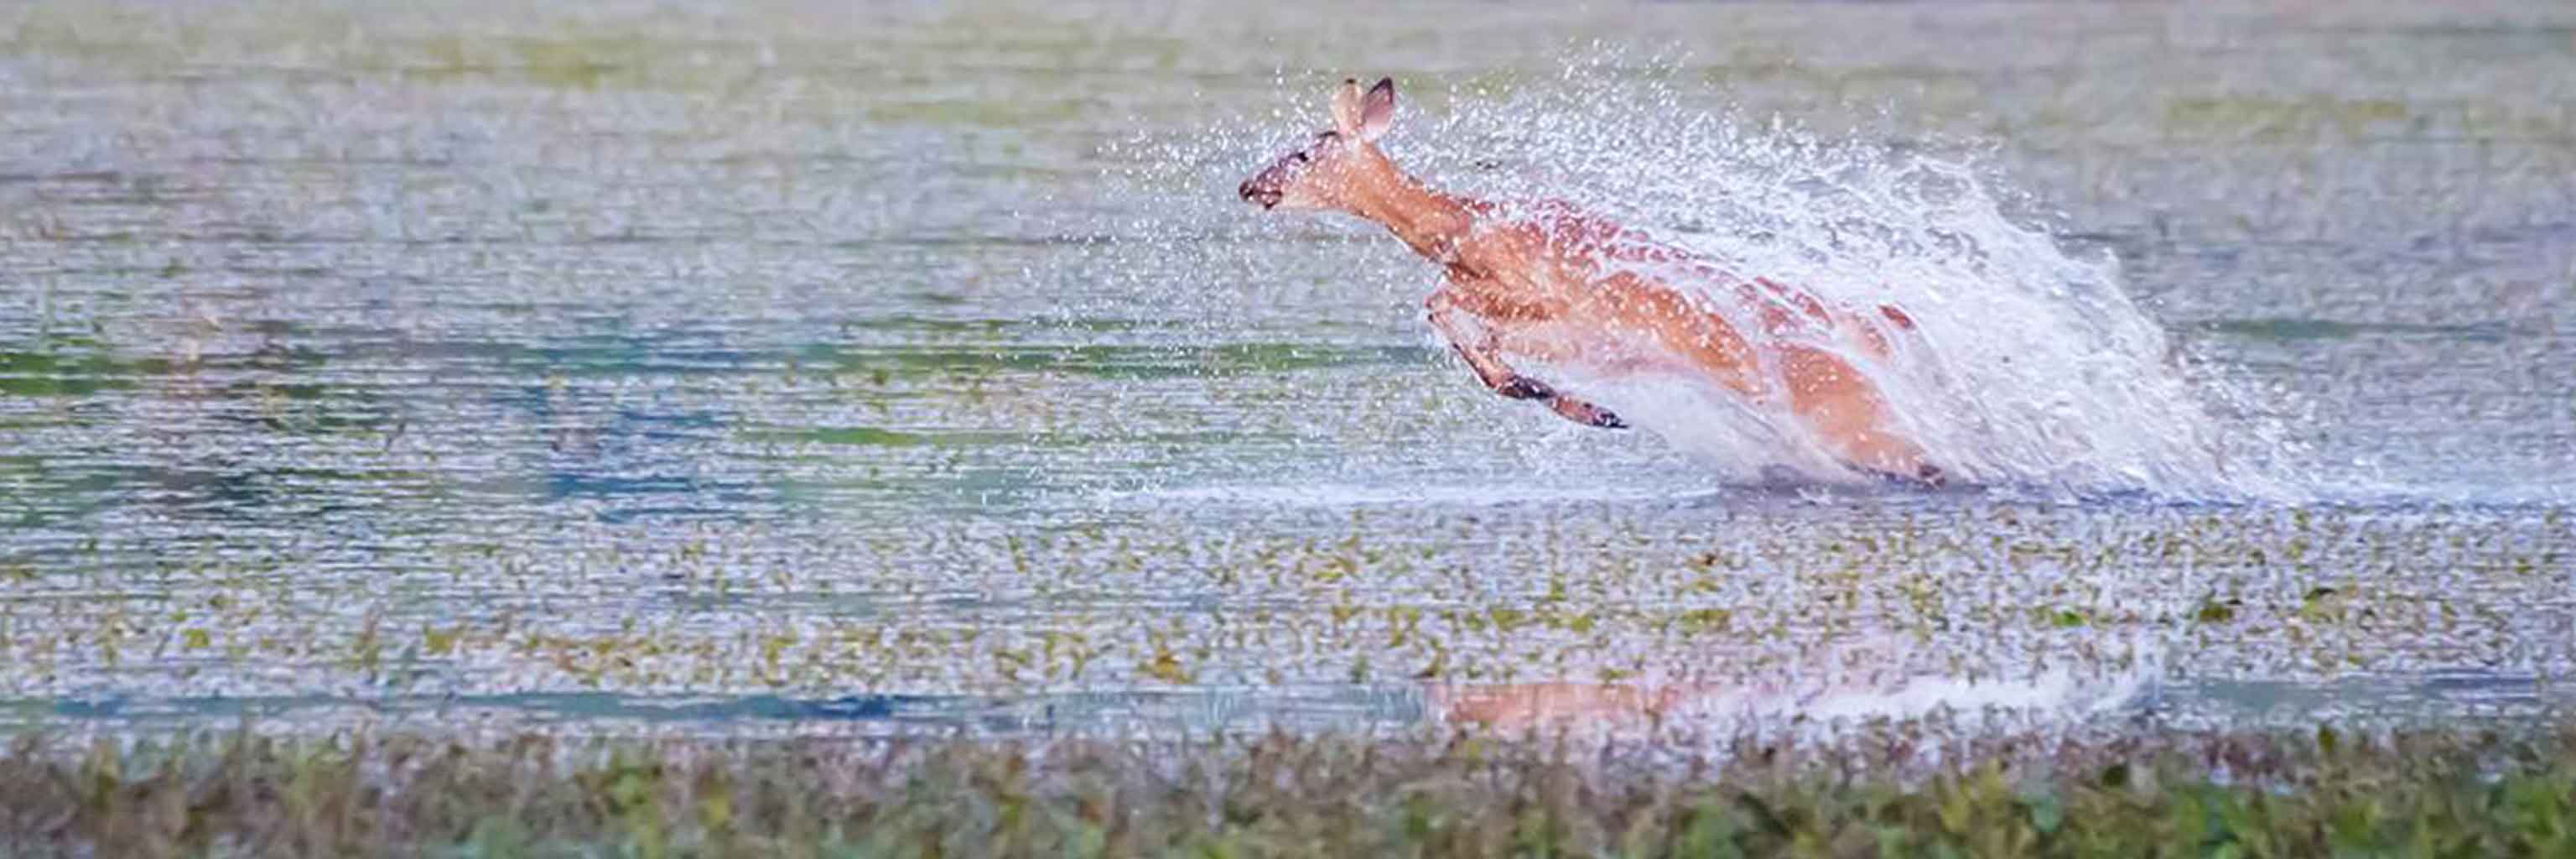 Deer splashing in a pond